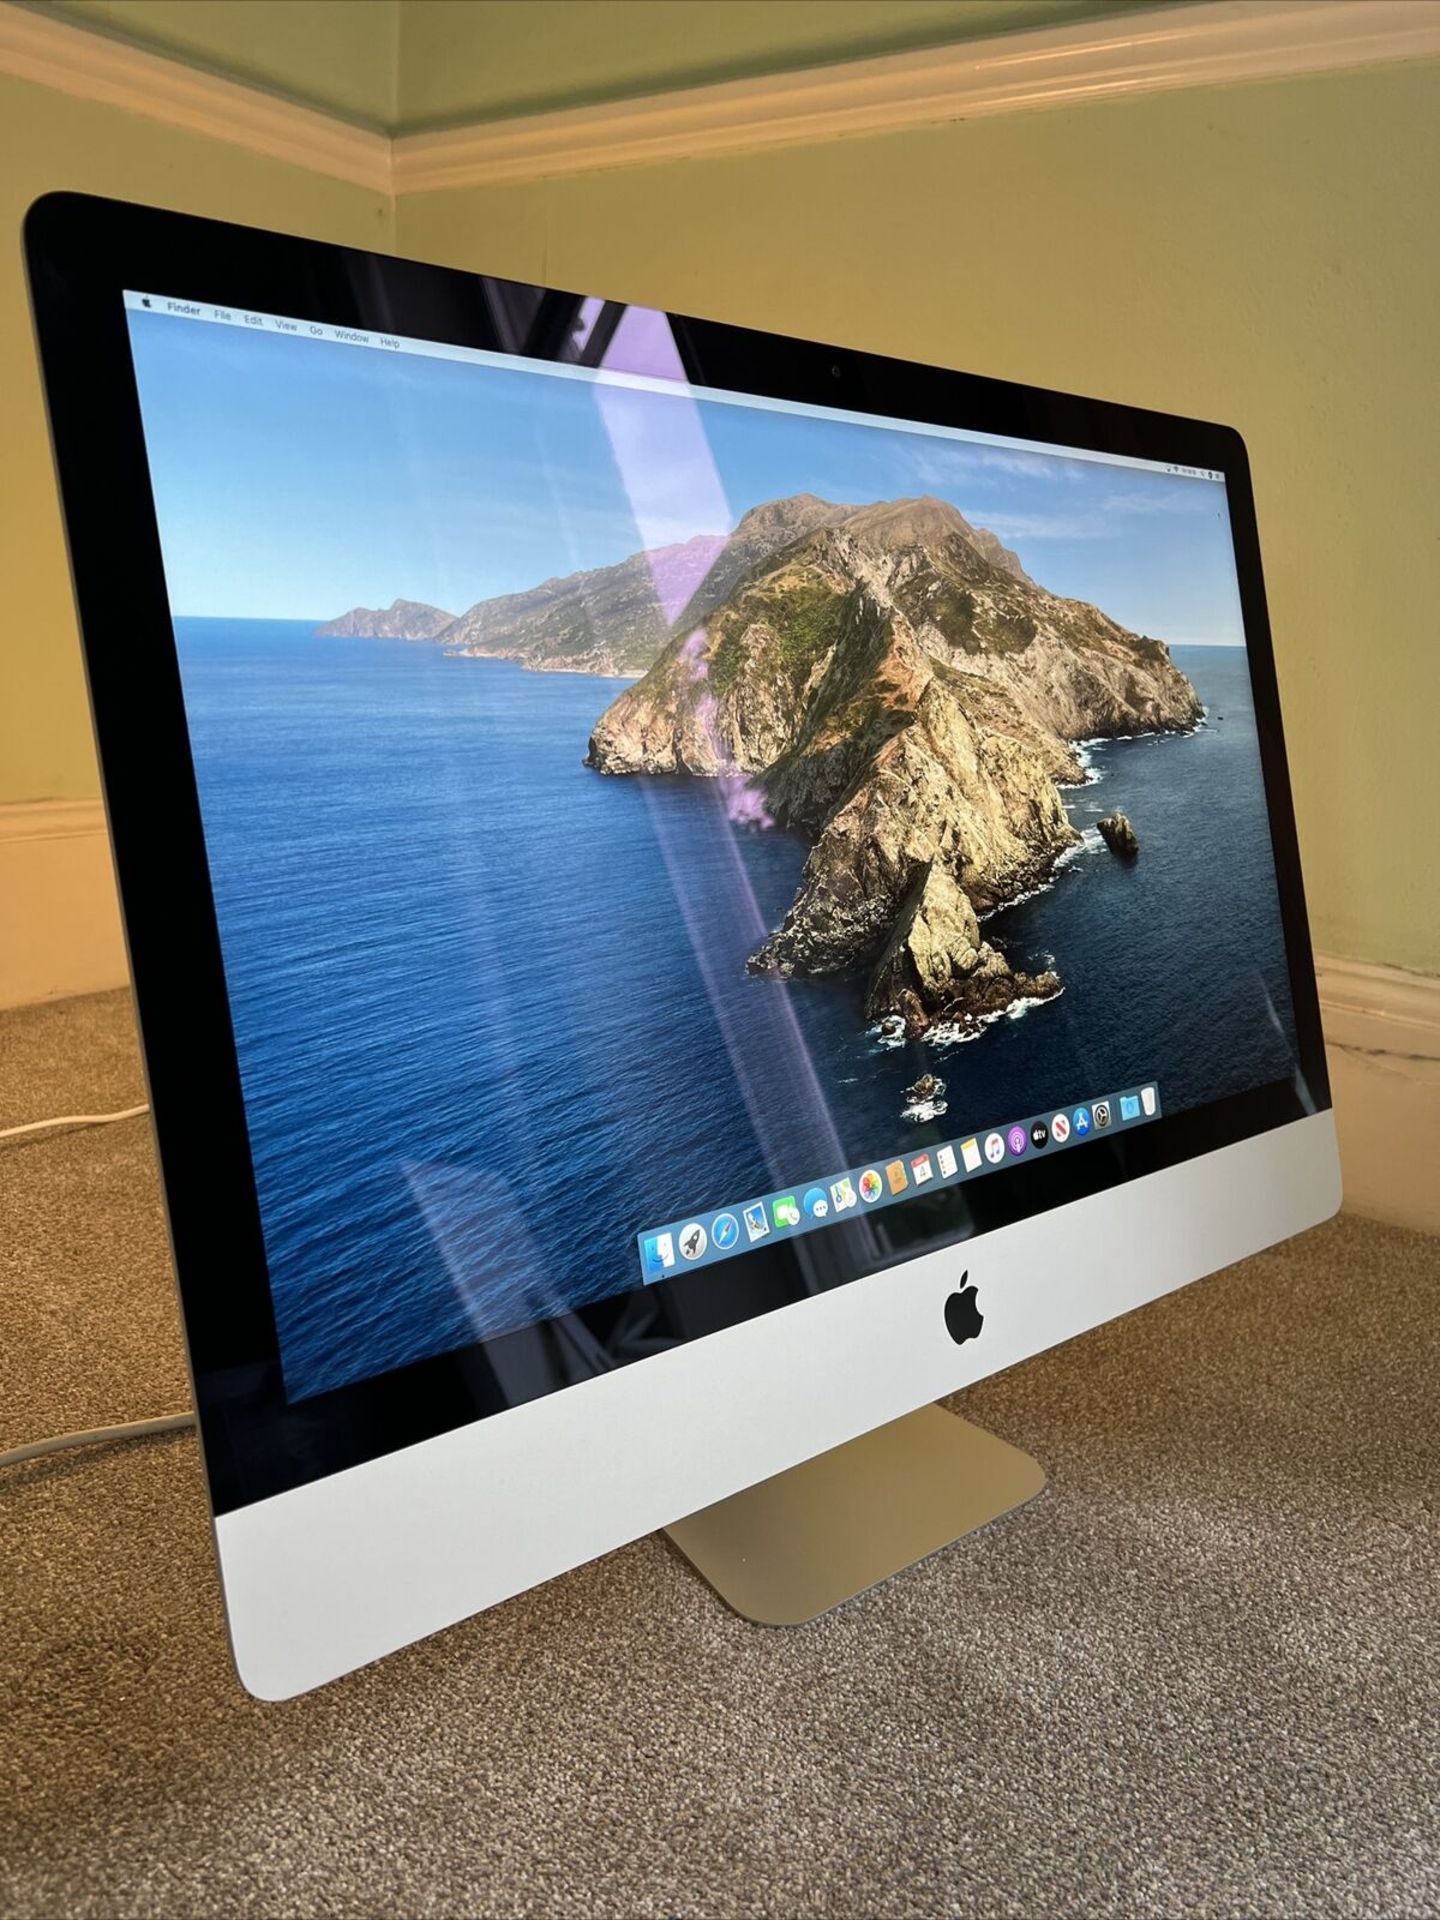 Apple iMac 21.5"" A1418 OS X Catalina Intel Core I5 8Gb DDR3 1TB HD GeForce GT 640M office - Image 2 of 5